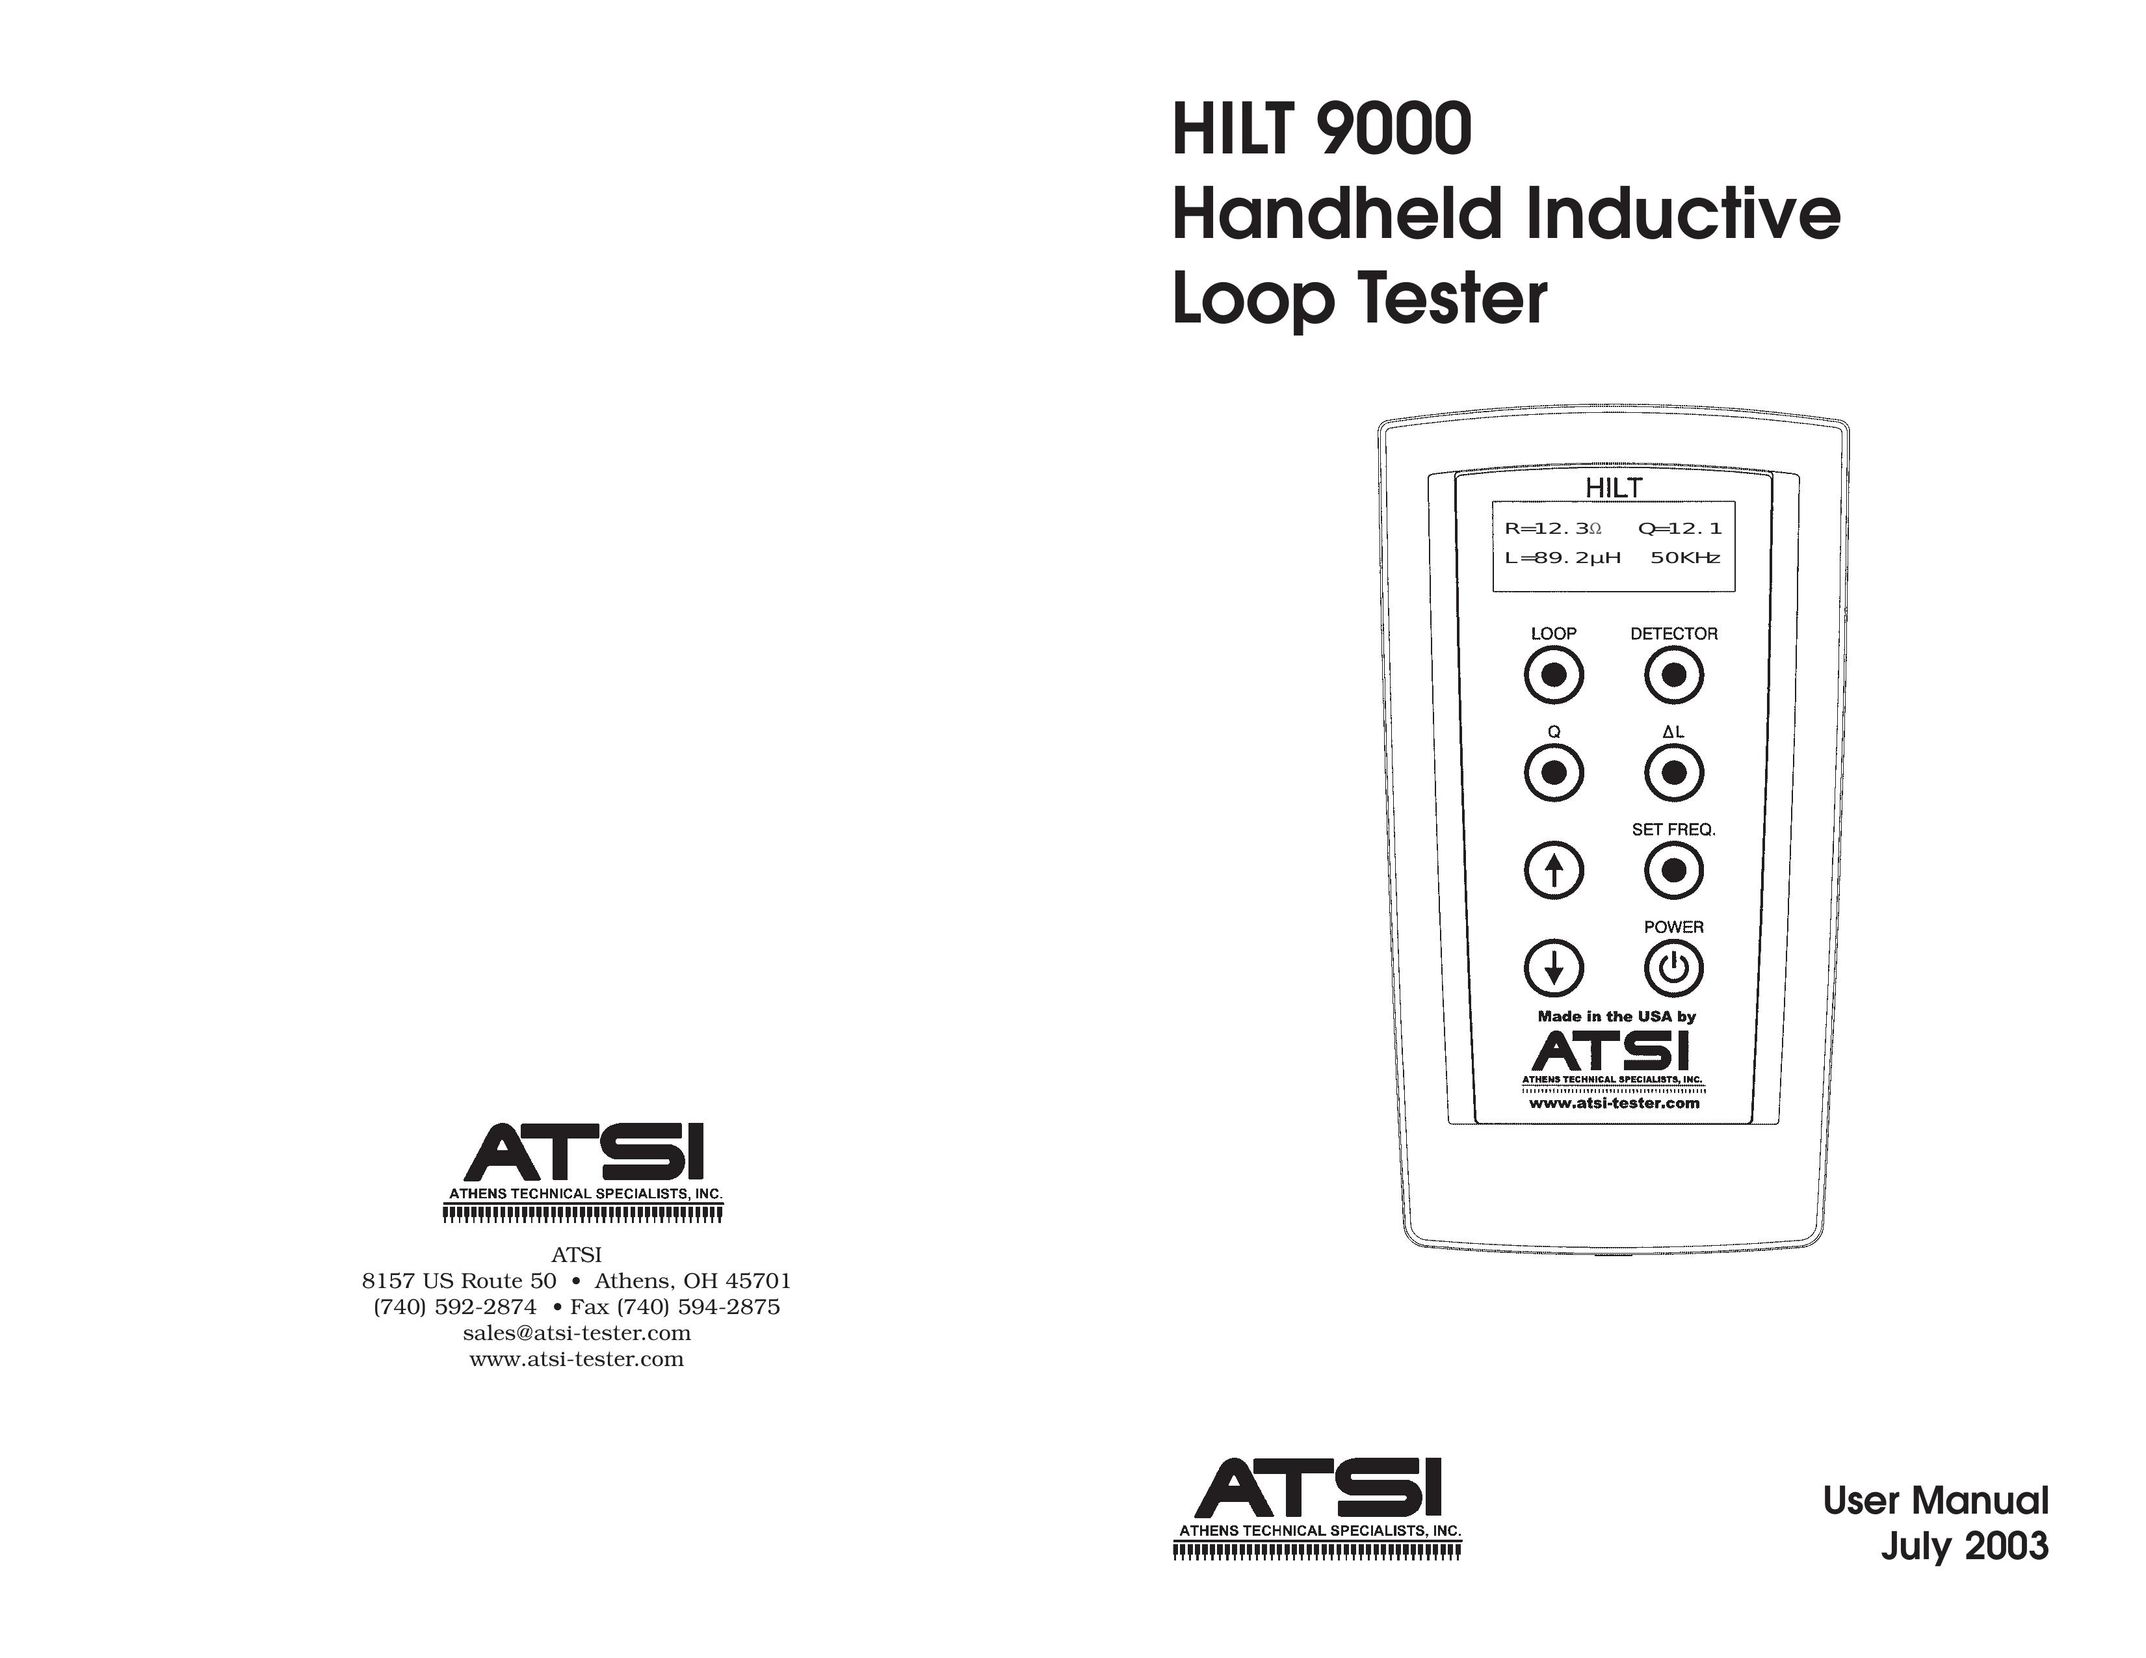 ATS HILT 9000 Network Card User Manual